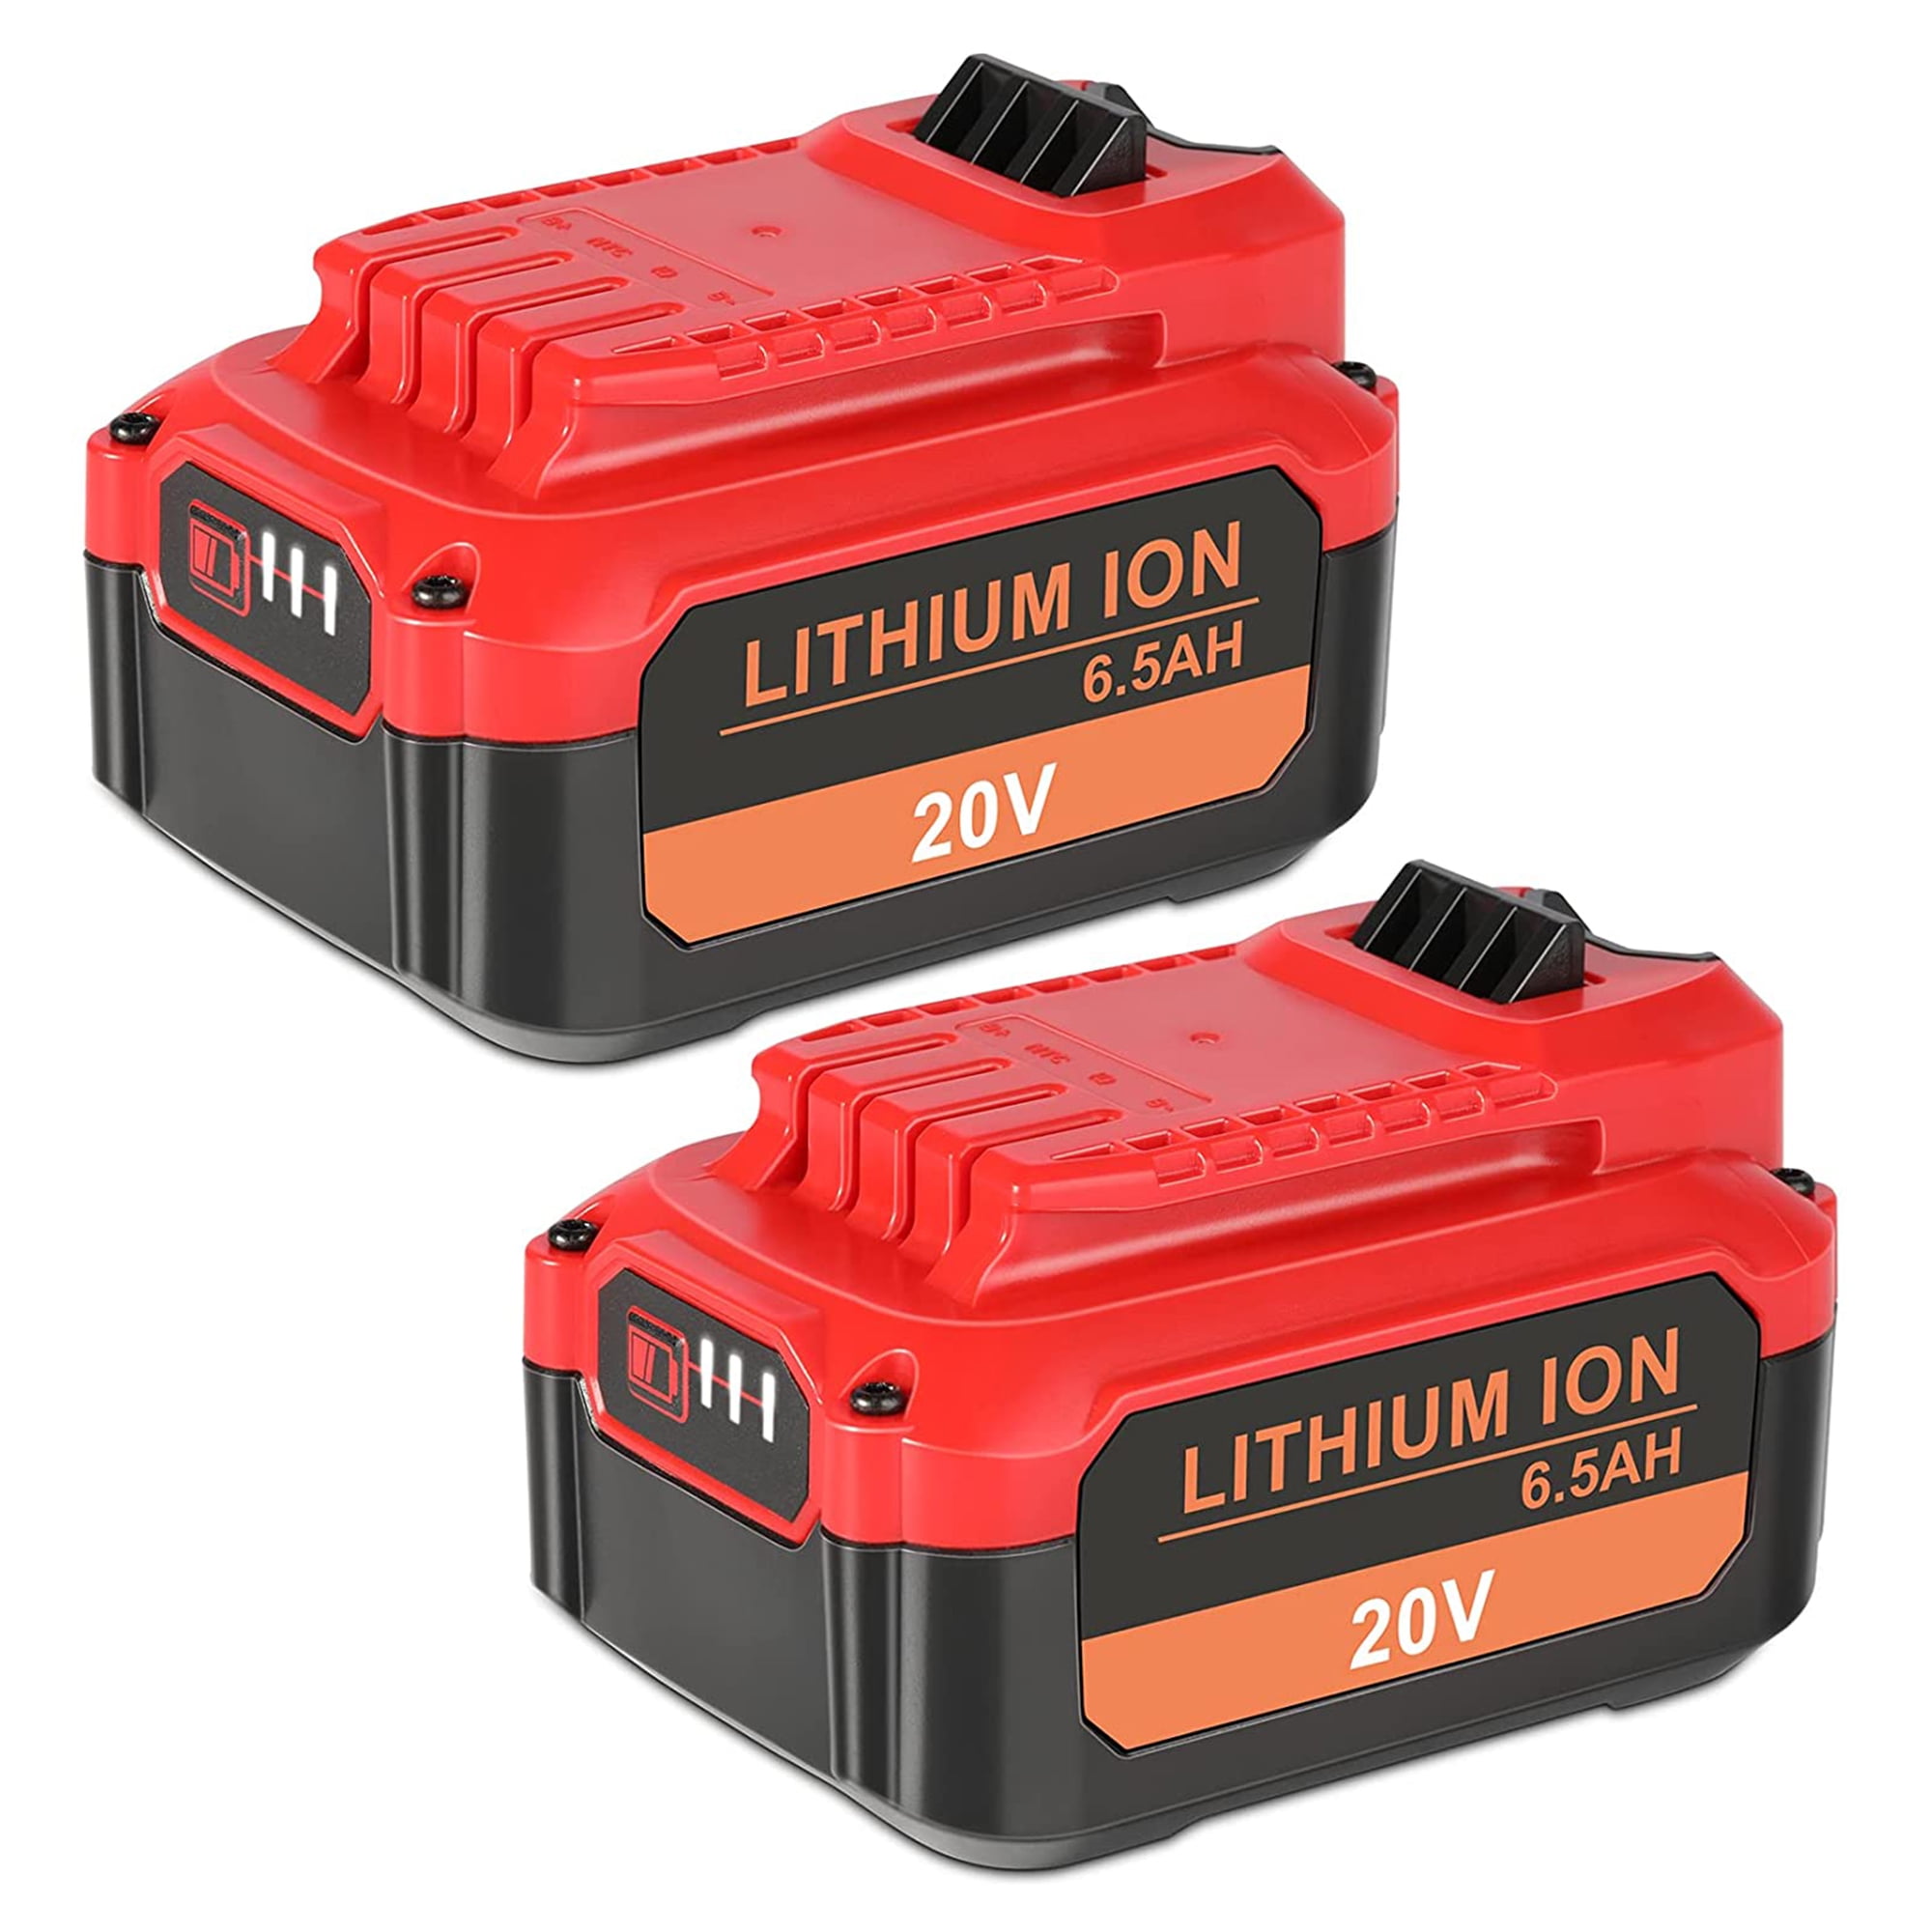 2X 20V MAX Li-ion Battery for Craftsman V20 Cordless Power Tools CMCB204 CMCB202 